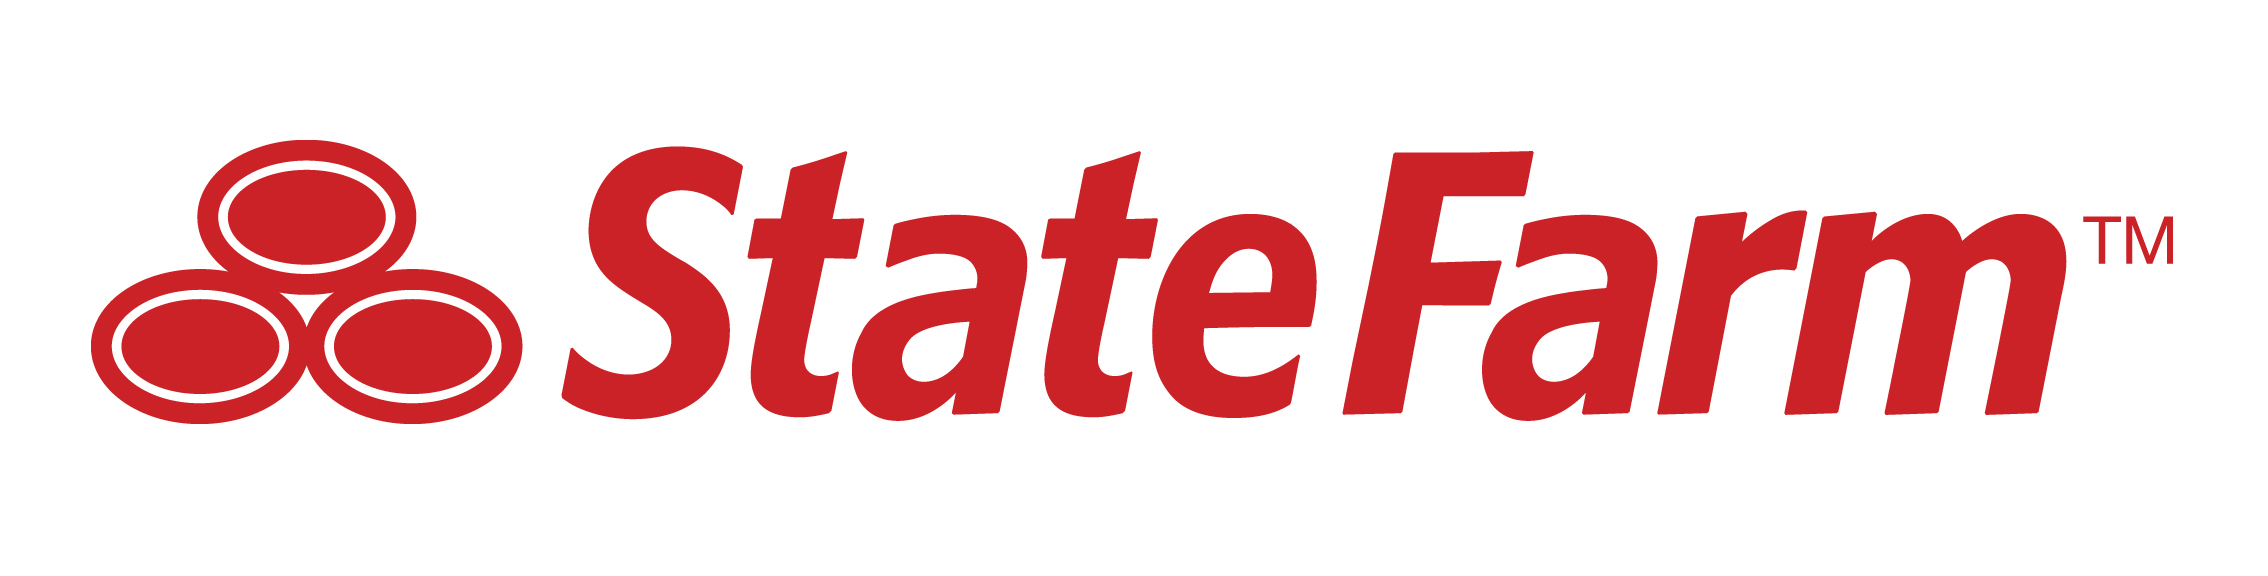 State-Farm-New-Logo